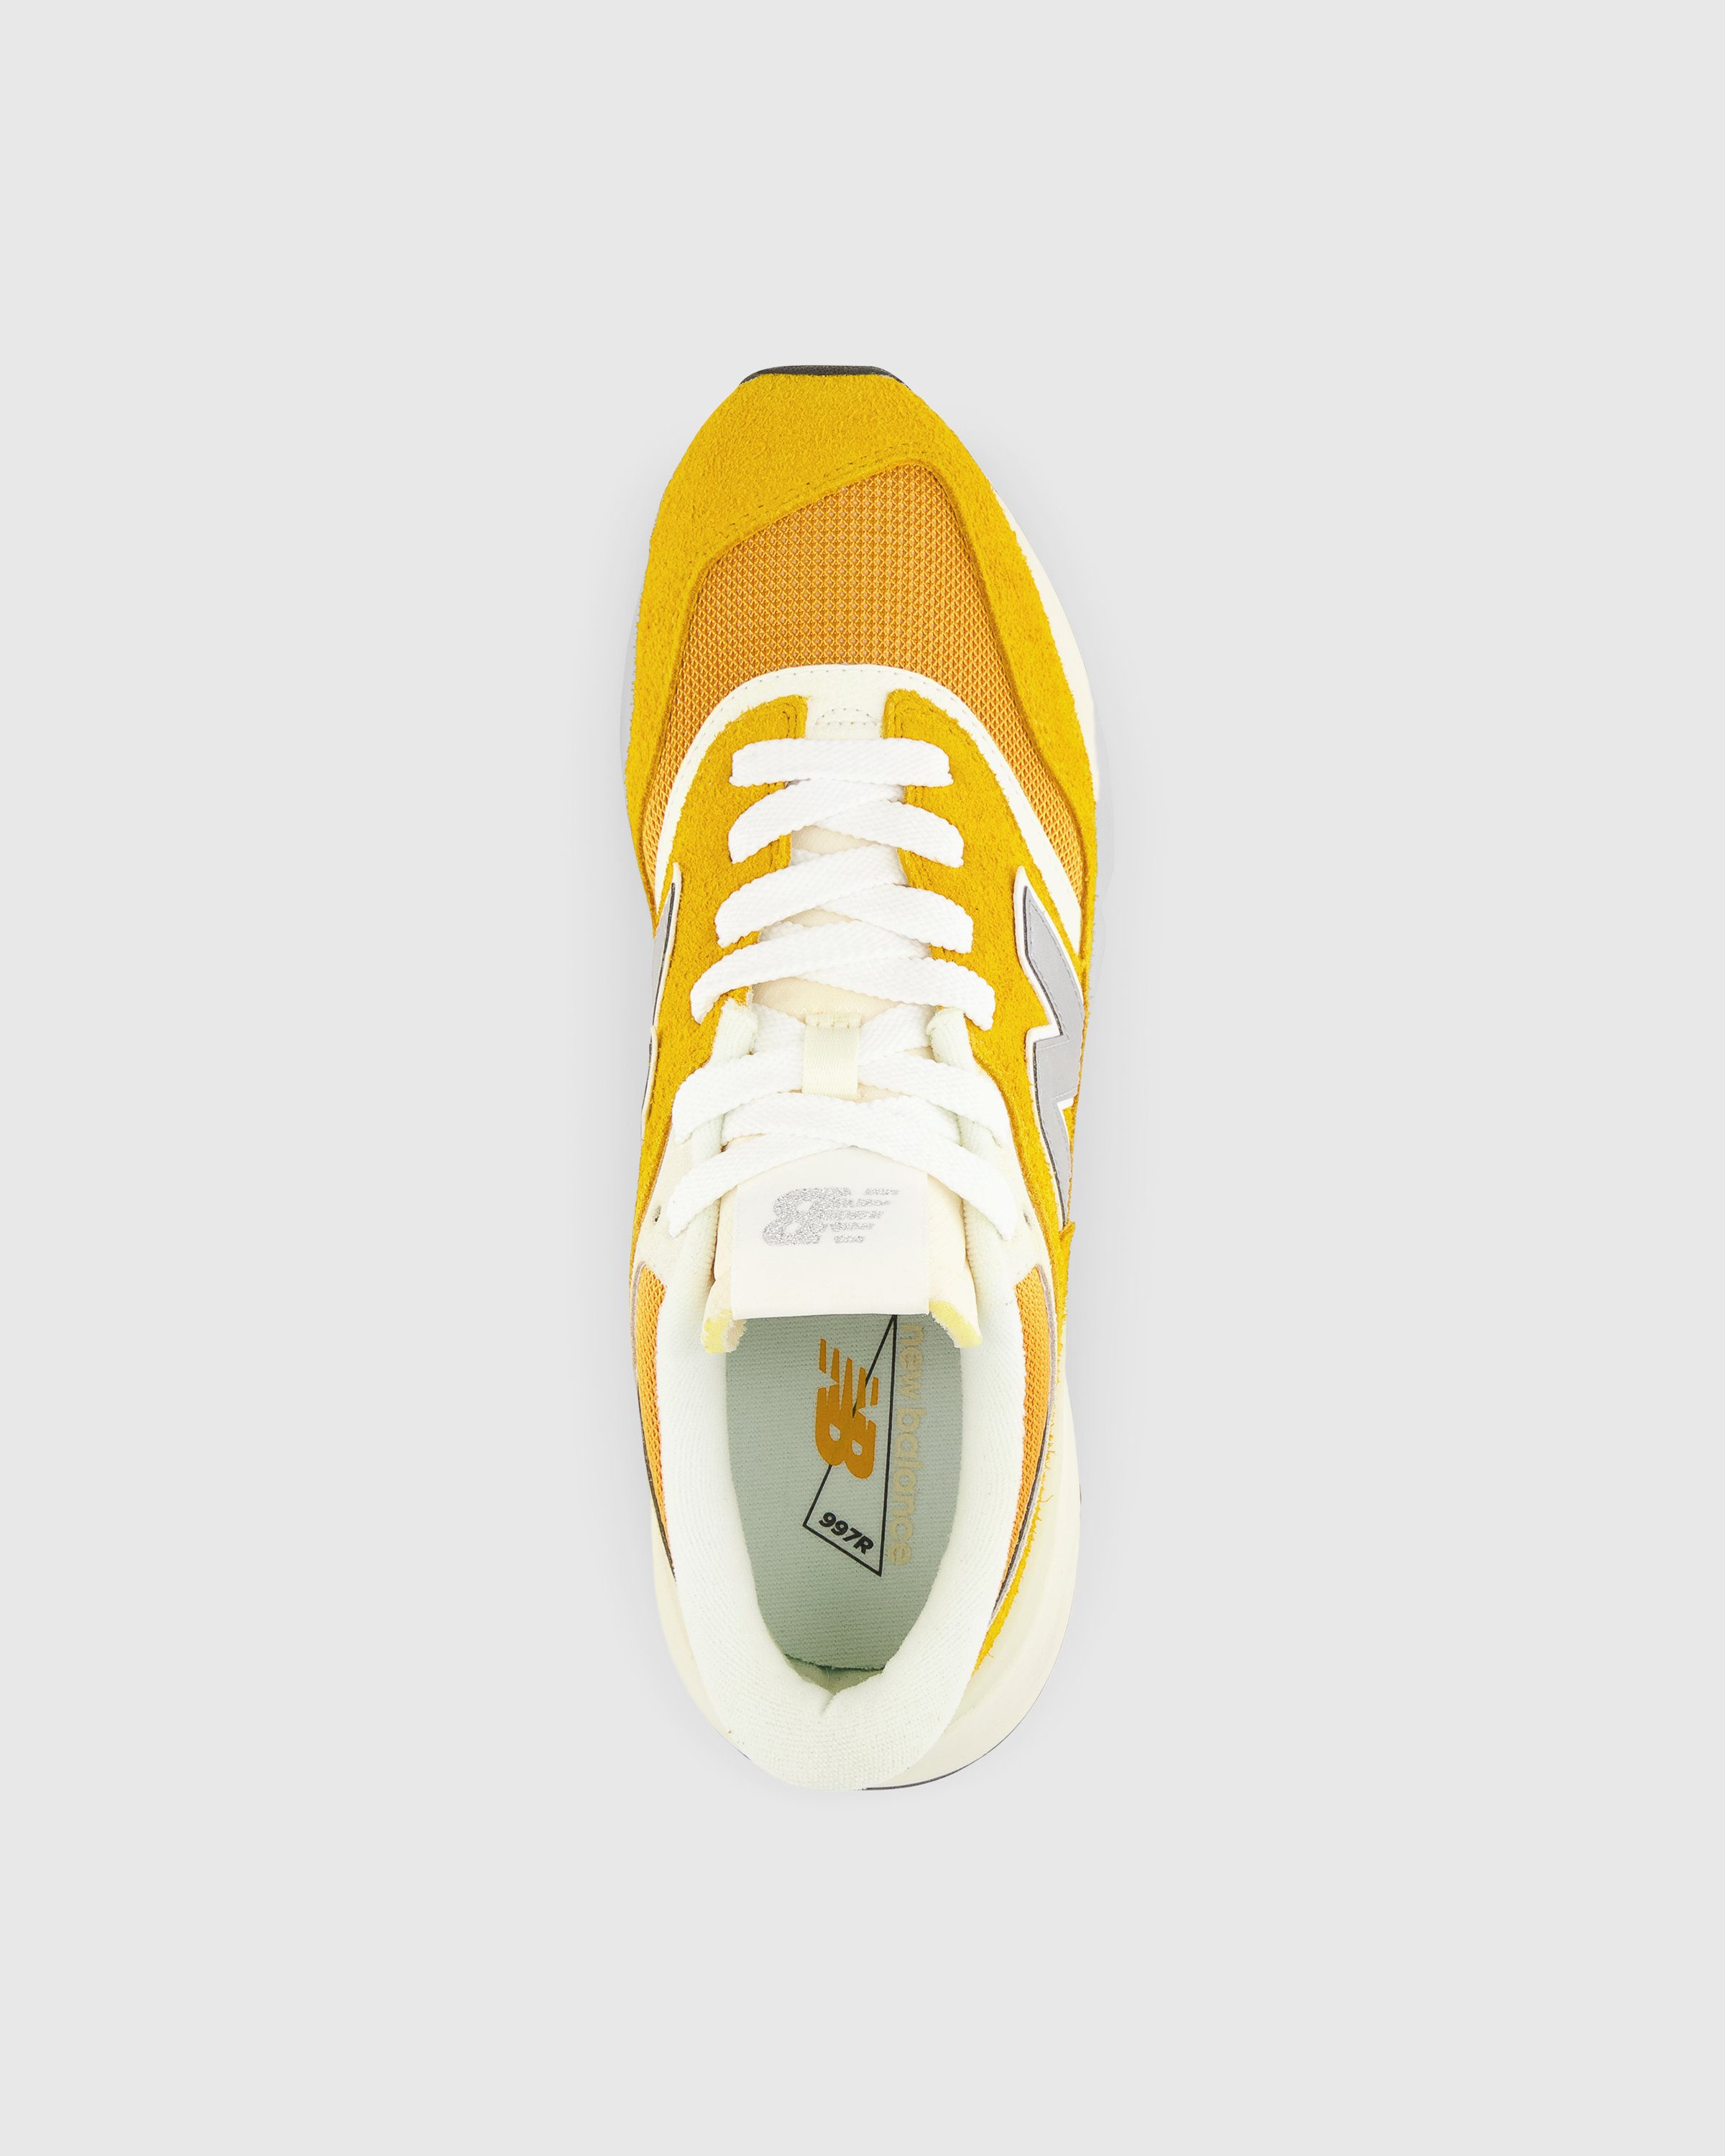 New Balance - U 997R CB Varsity Gold - Footwear - Yellow - Image 4